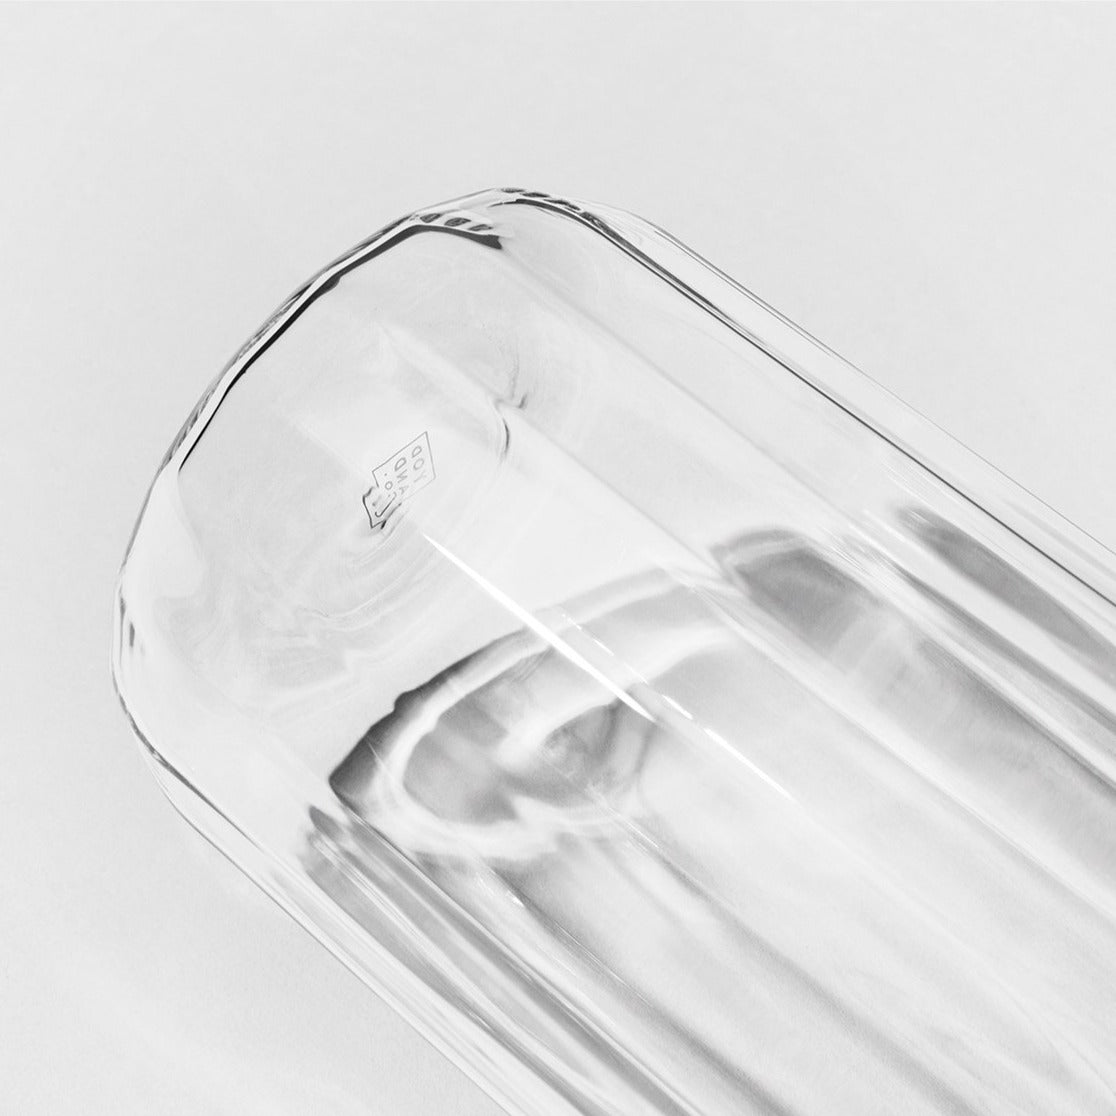 Yod and Co Rivington glass carafes design by Blond design studio detail shot